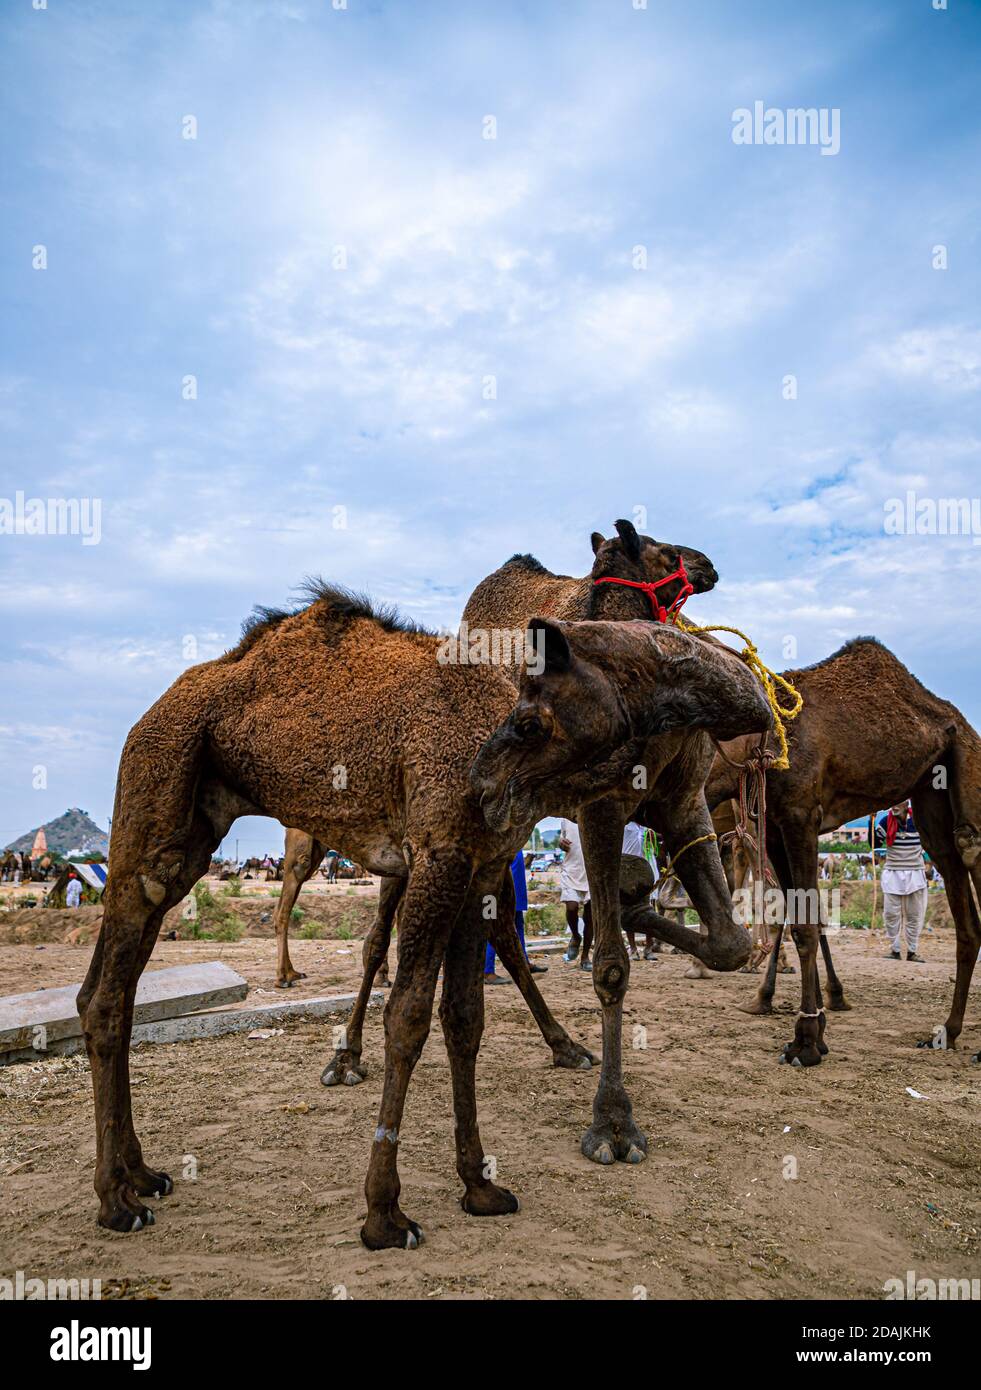 herd of camel and dramatic blue sky at pushkar camel festival. Stock Photo